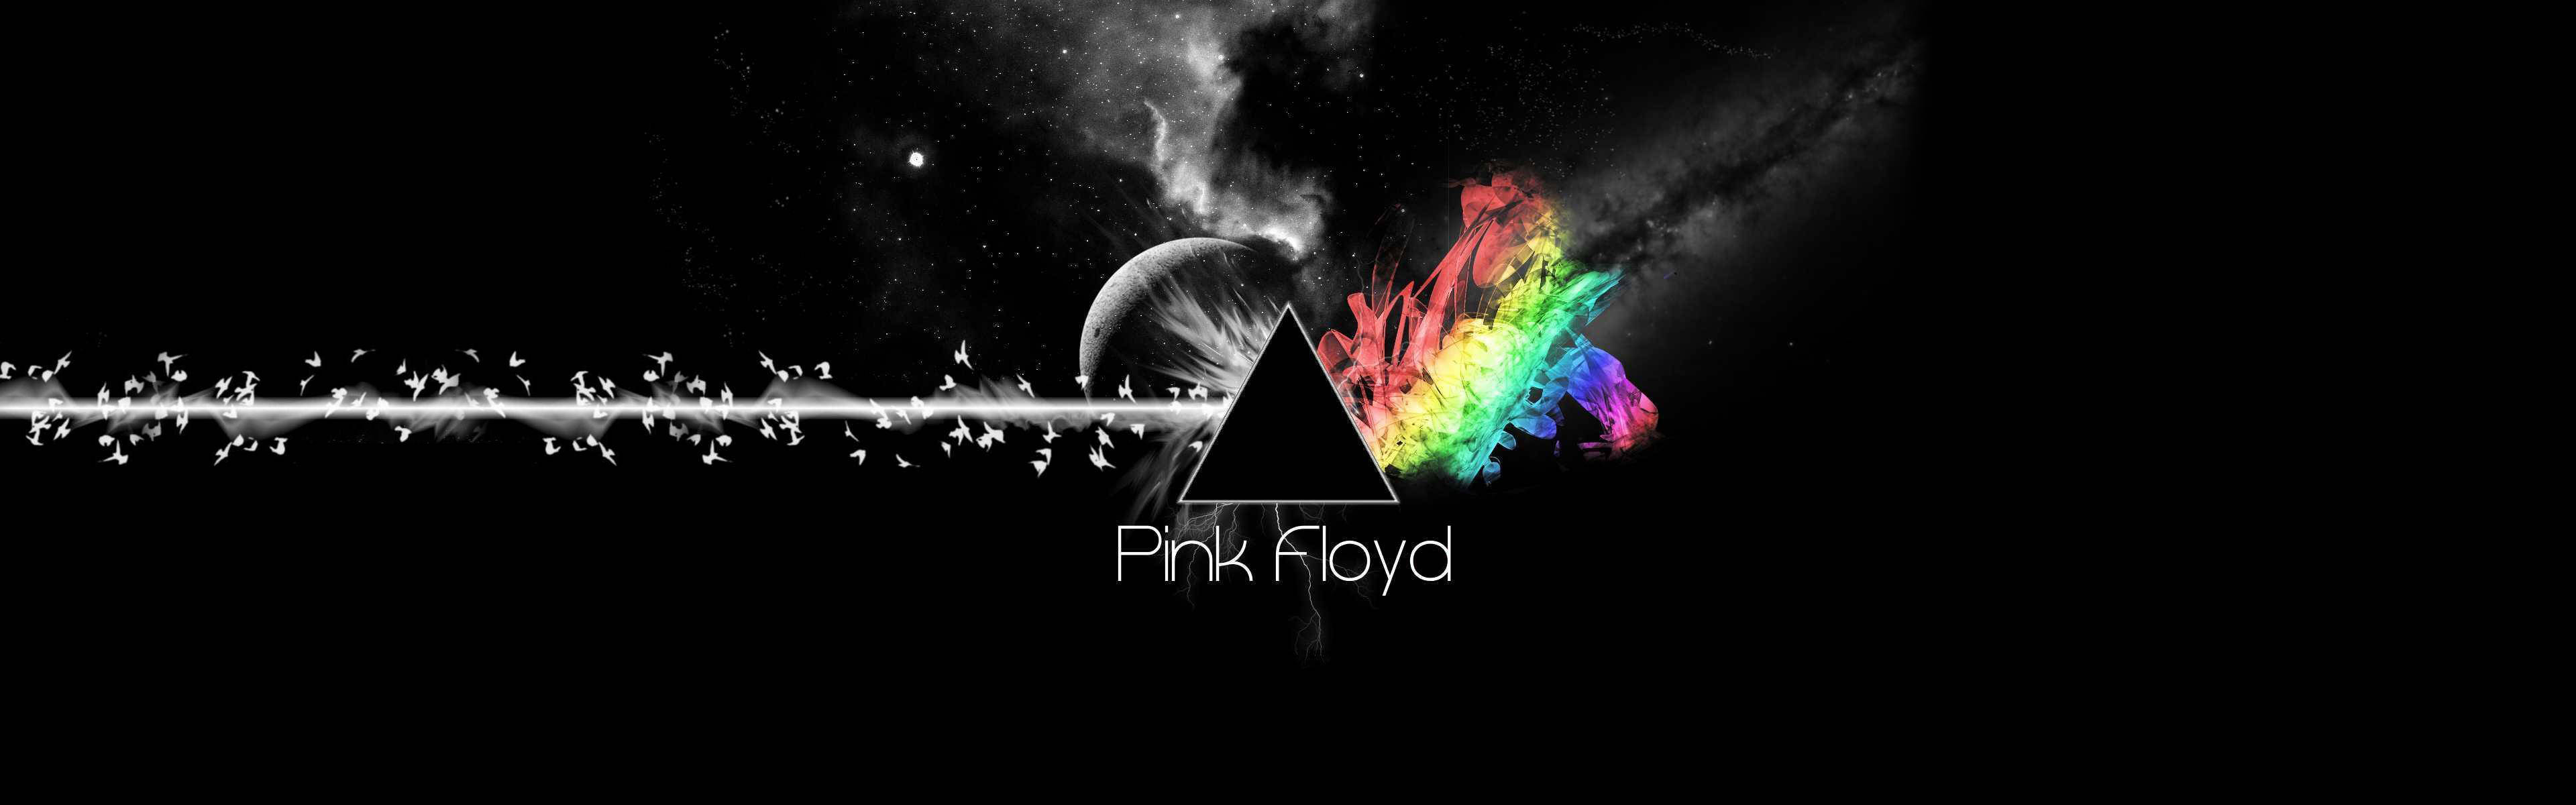 Pink Floyd Wallpaper HD Base